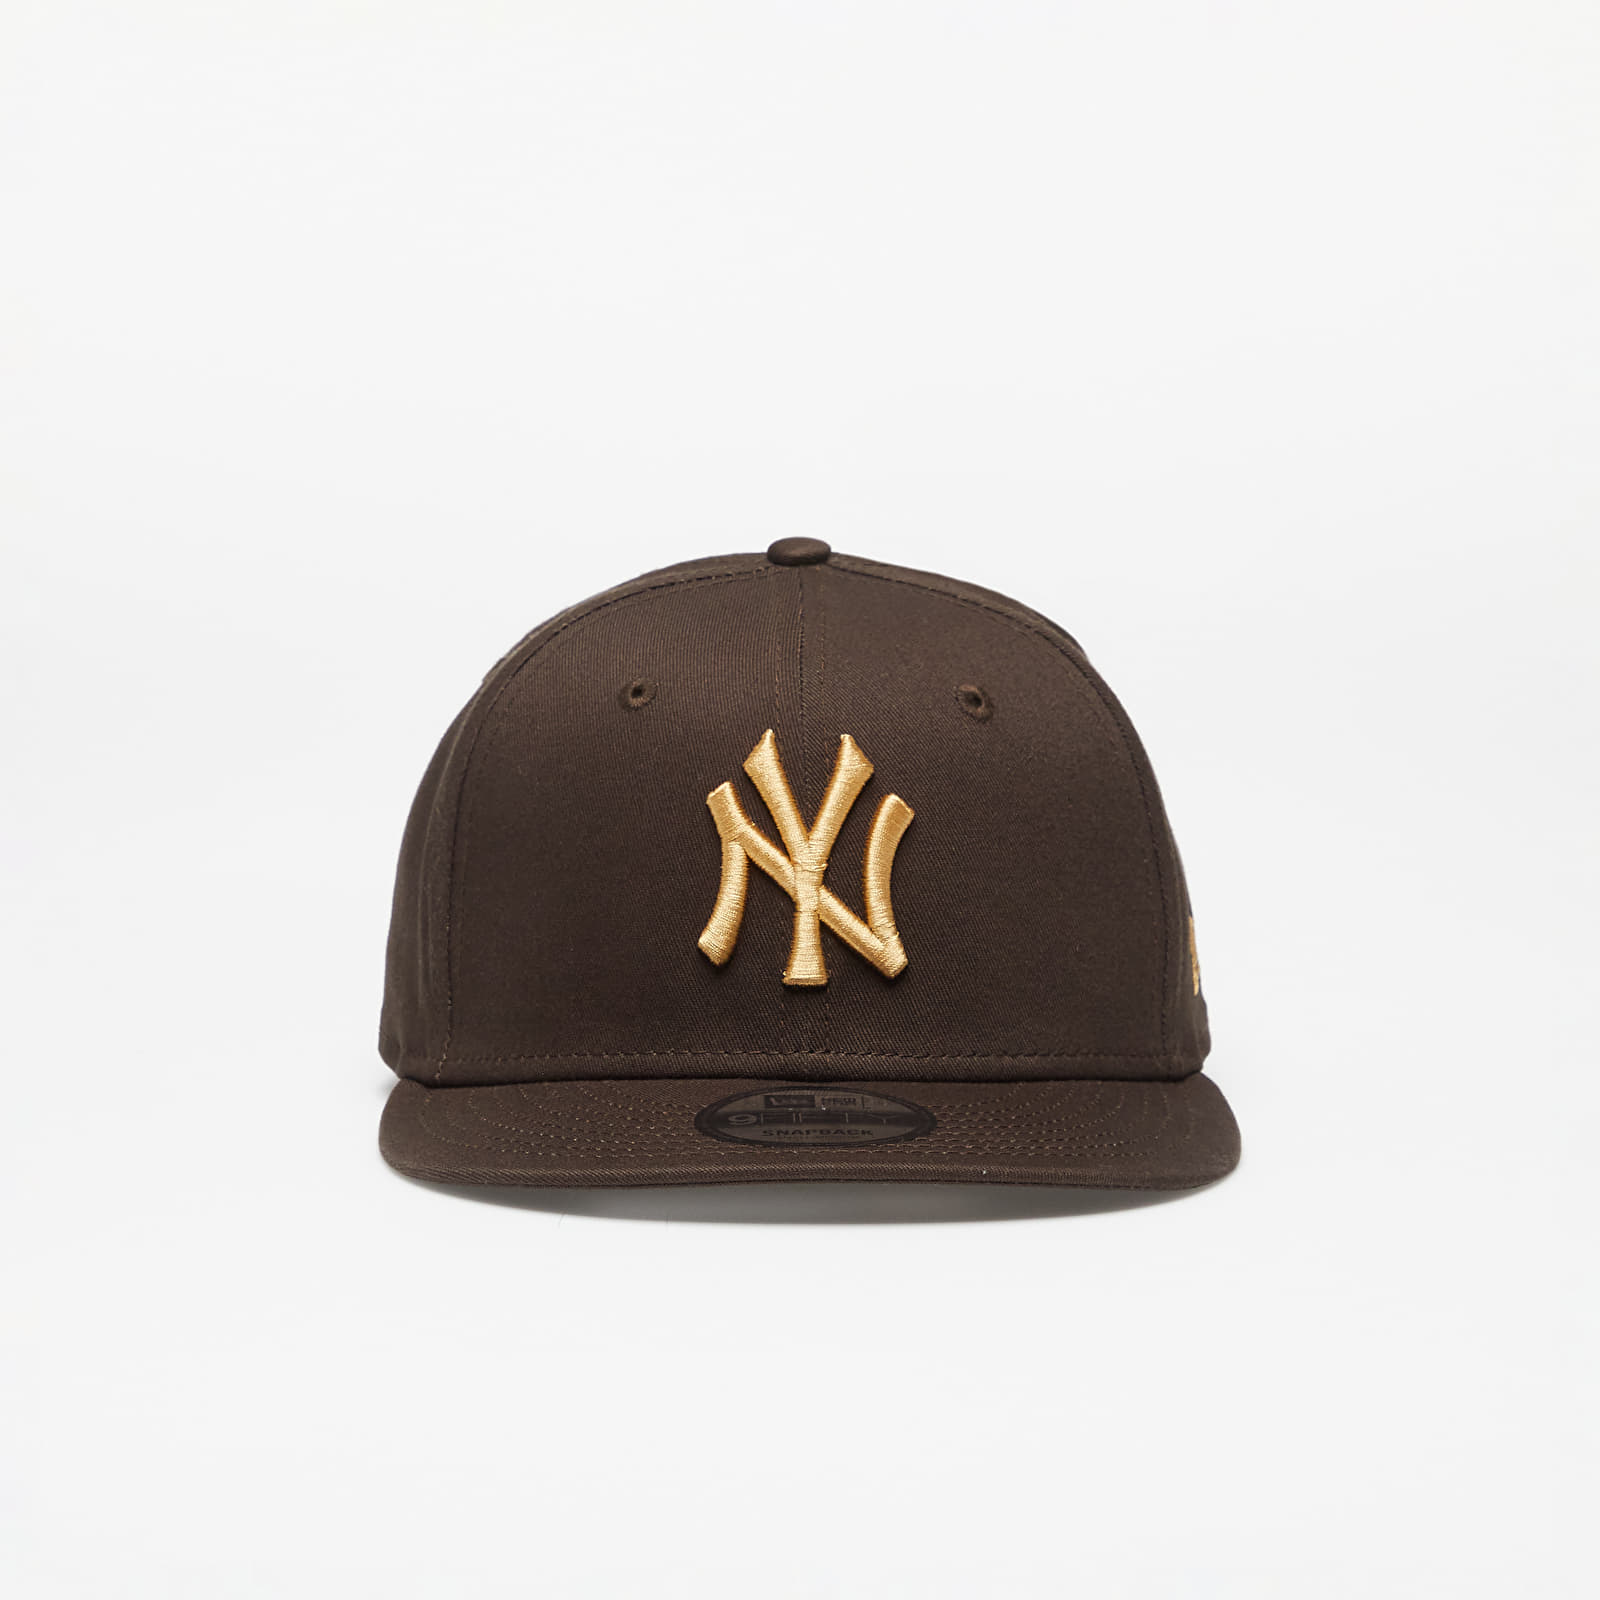 Caps New Era New York Yankees League Essential 9FIFTY Snapback Cap Nfl Brown Suede/ Bronze